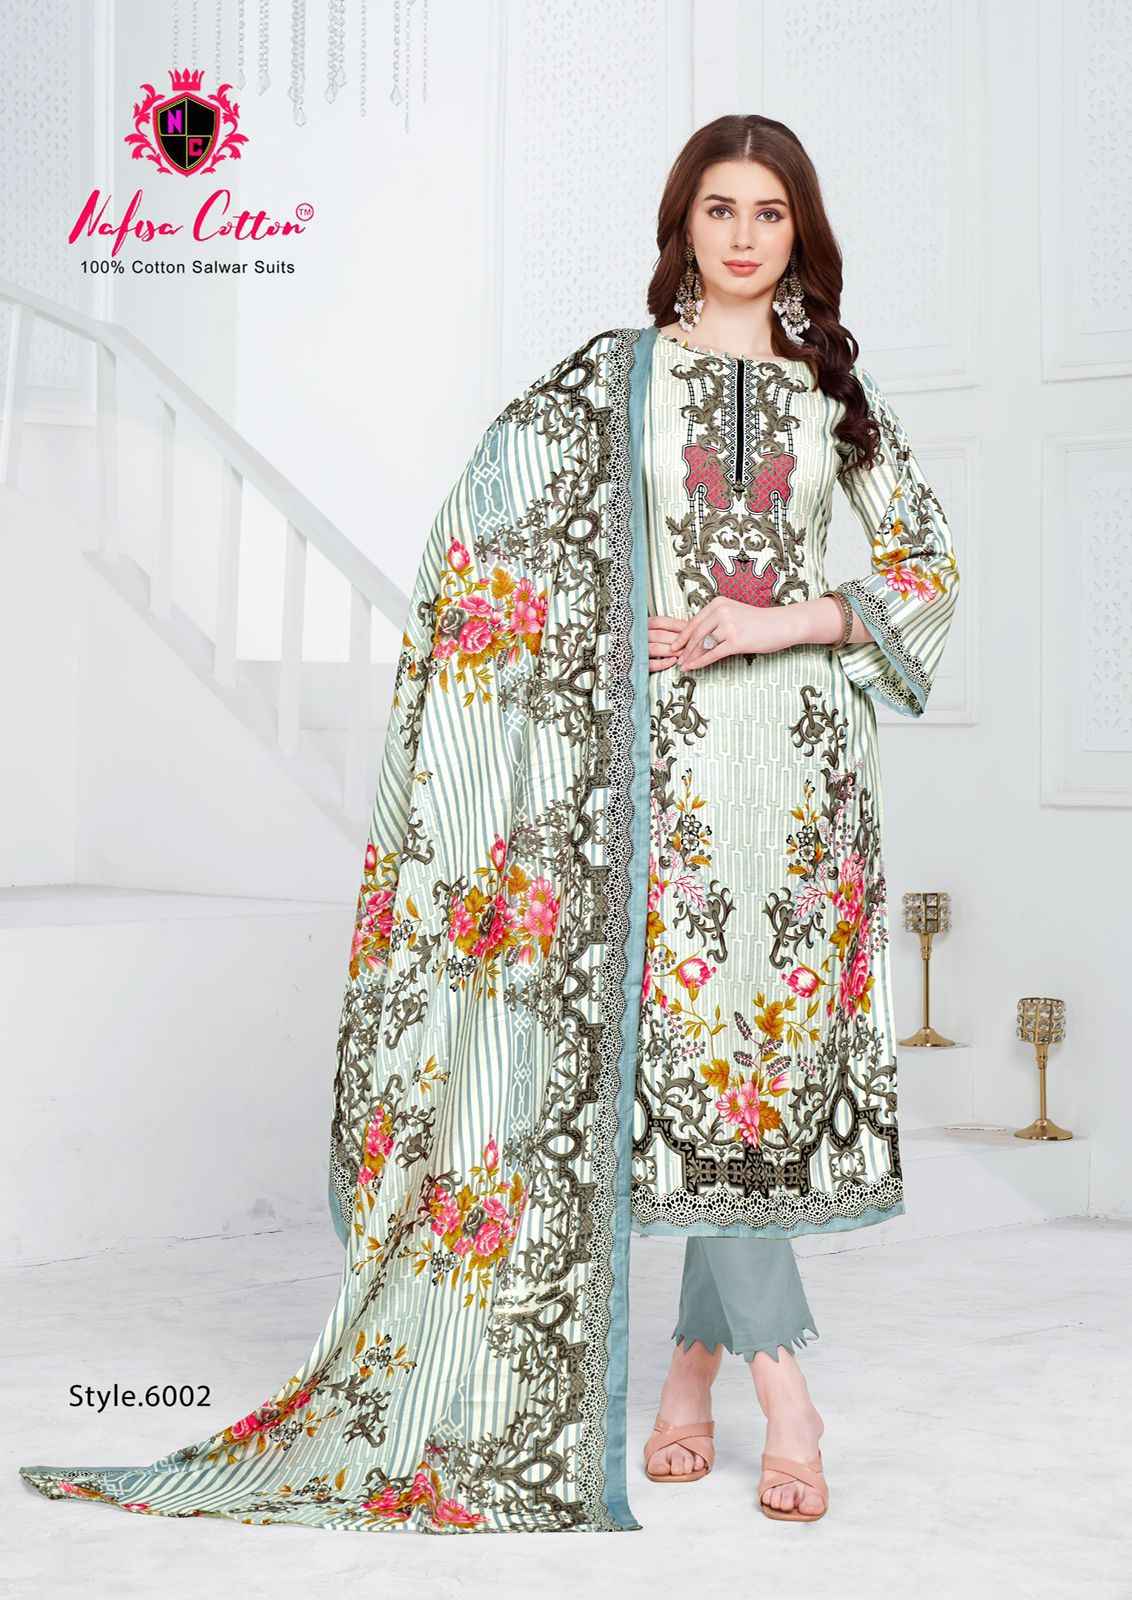 Nafisa Cotton Safina Vol-6 Cotton Dress Material (6 pcs Catalogue)